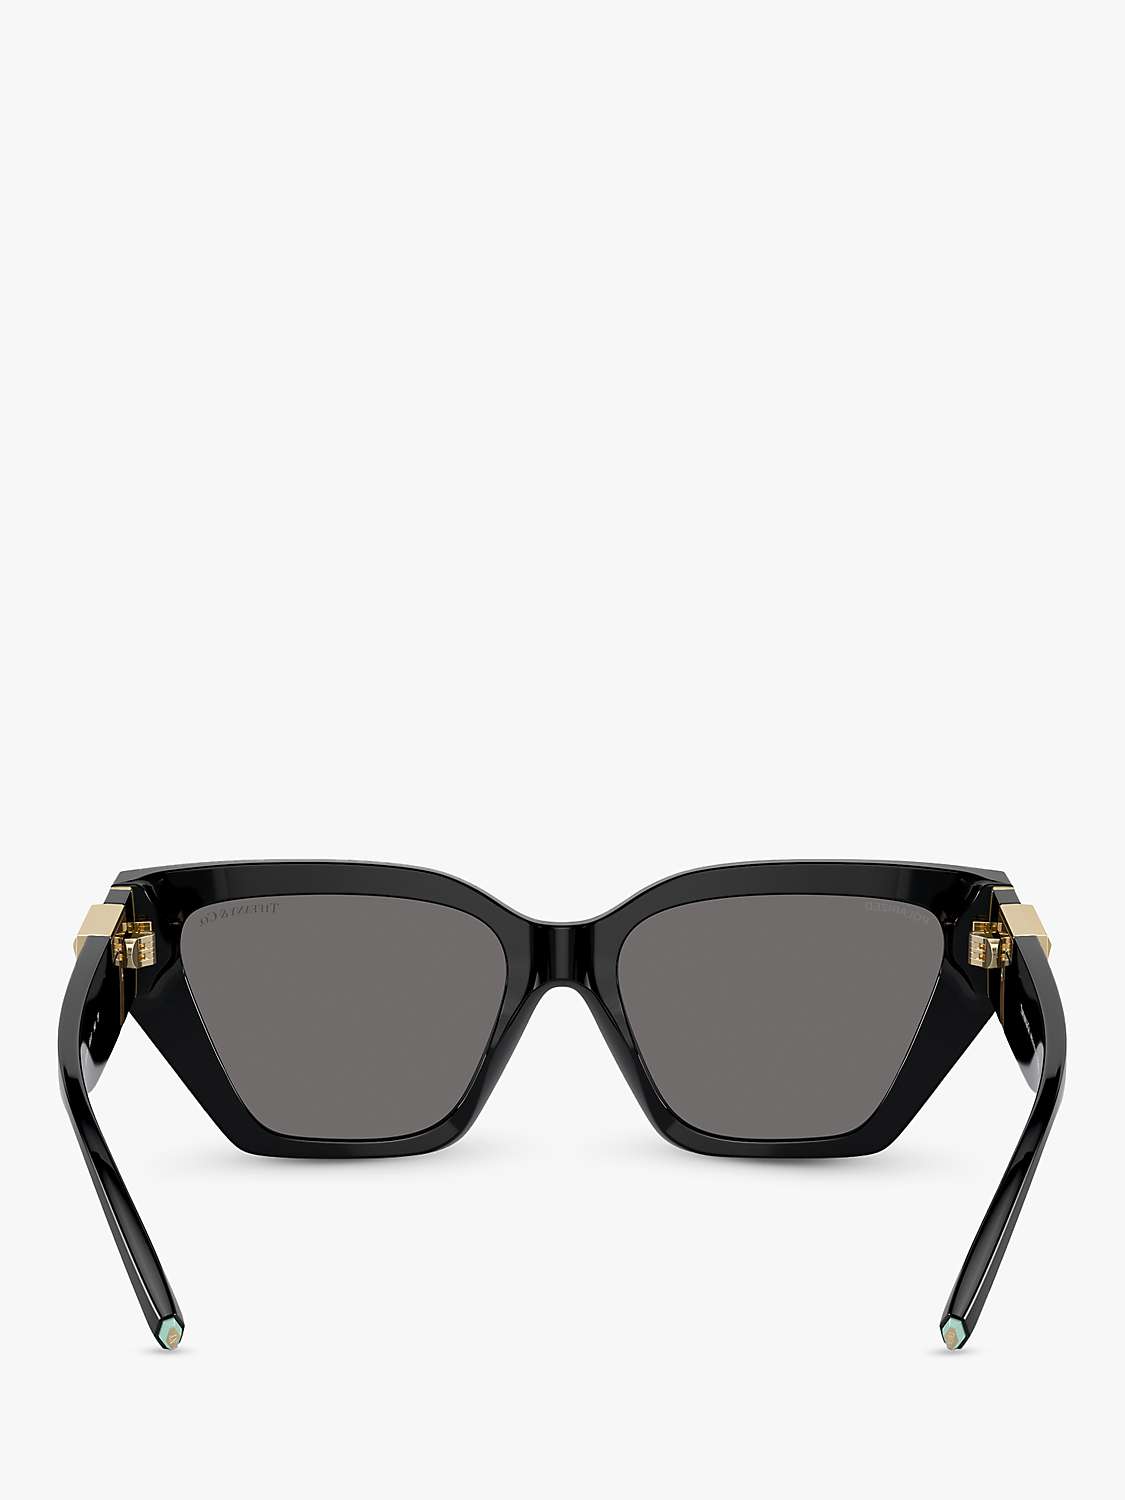 Buy Tiffany & Co TF4218 Women's Squared Cat Eye Sunglasses, Black Online at johnlewis.com